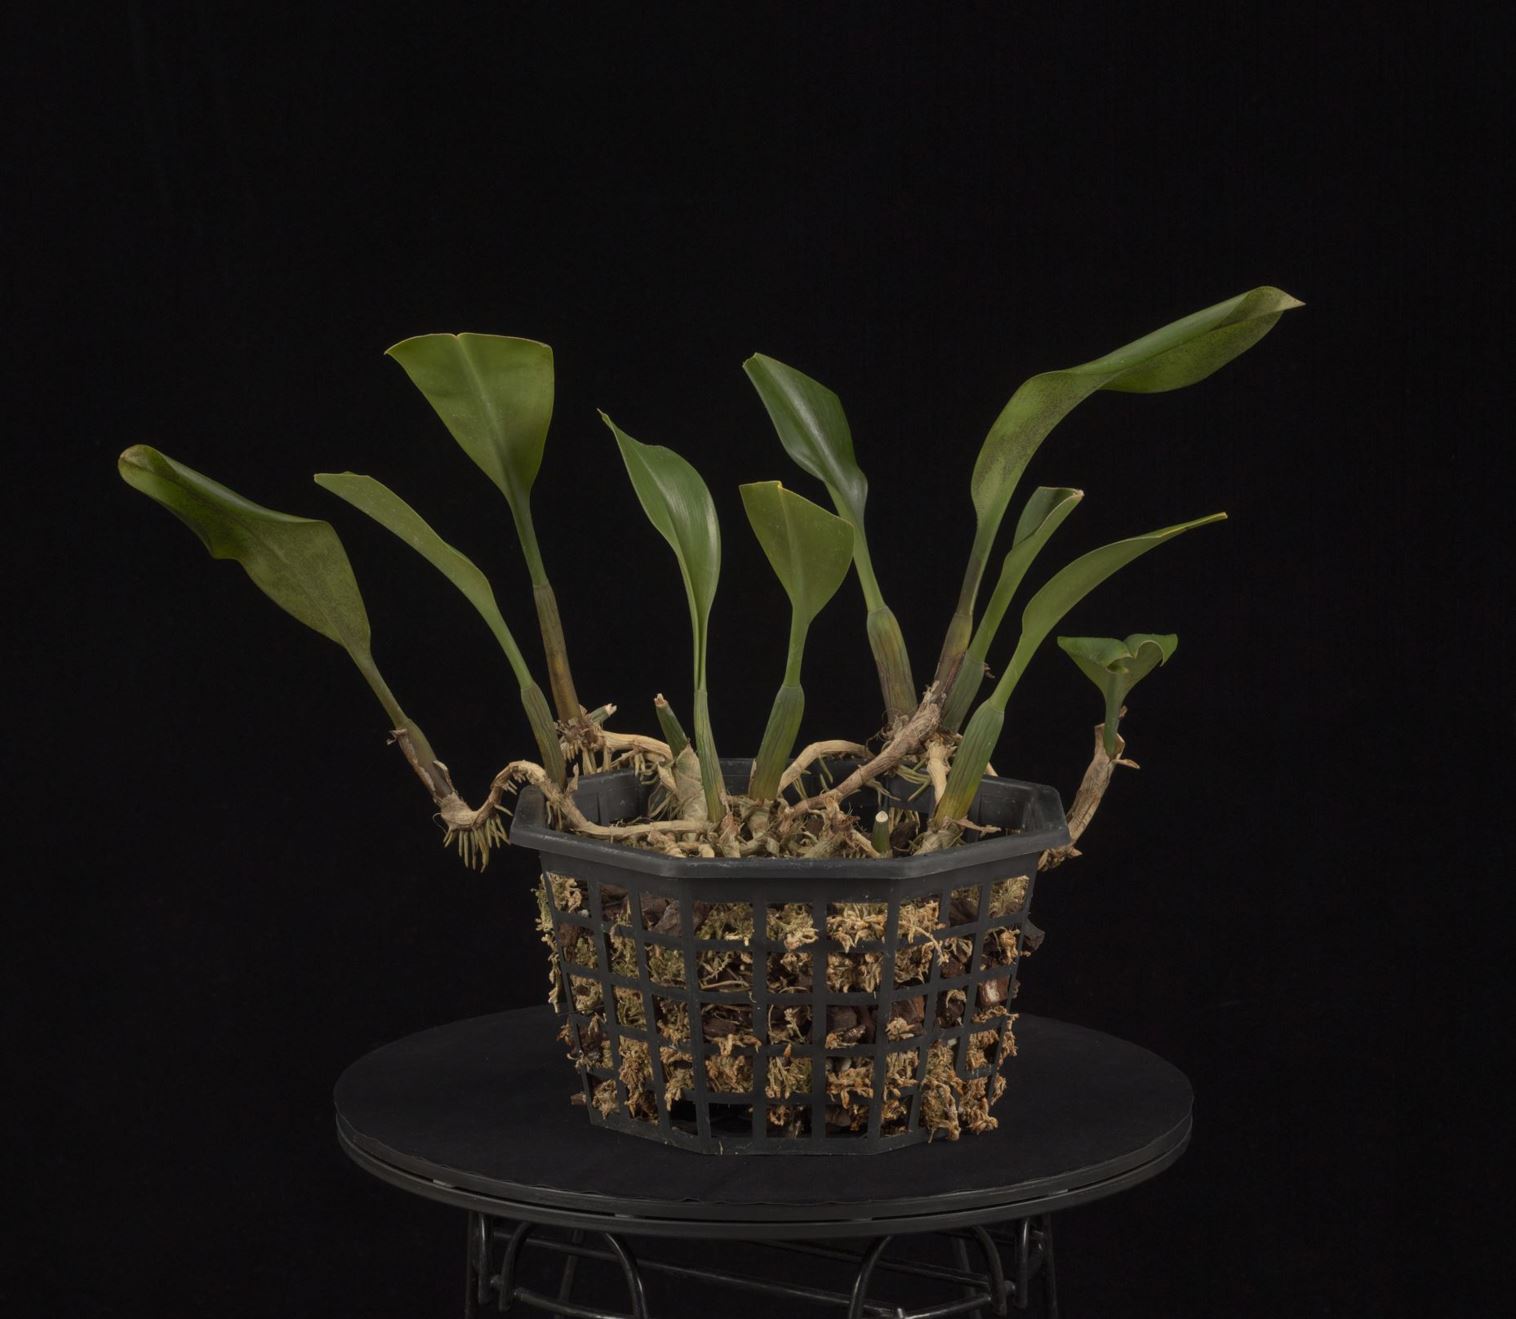 Bulbophyllum pahudii - Pahudi's Bulbophyllum